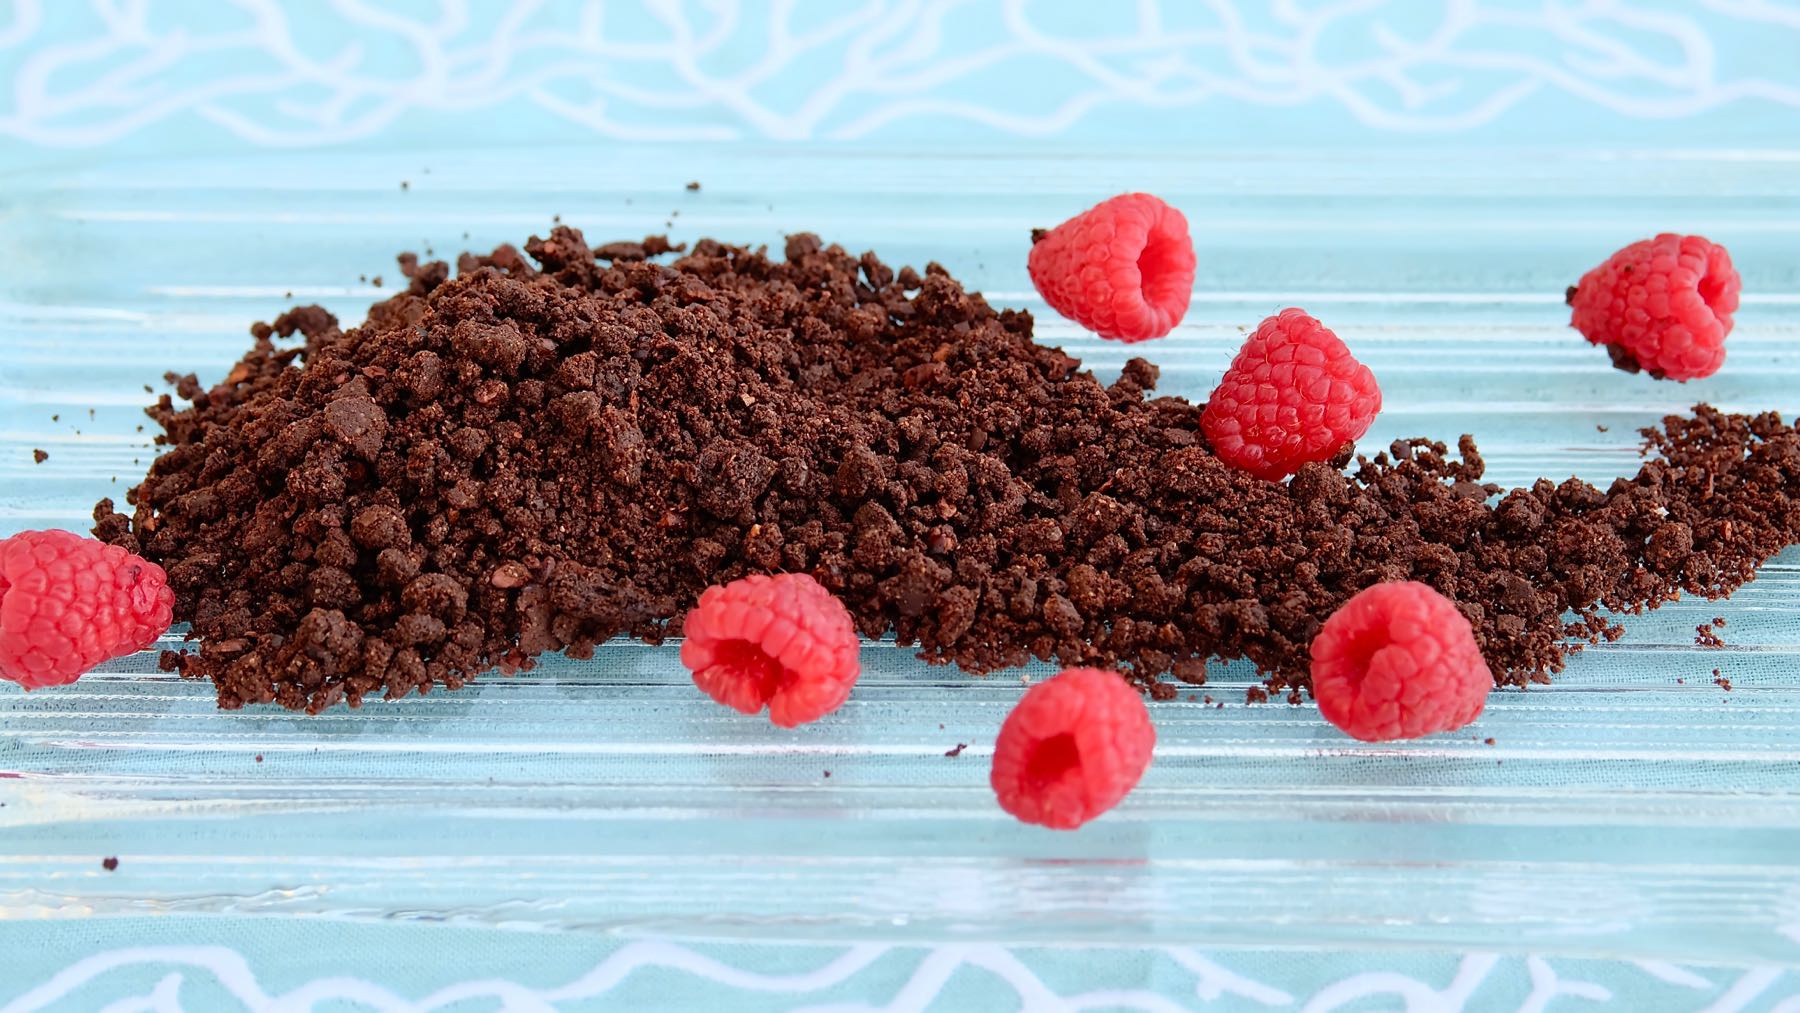 Chocolate Sand on Ice Glass garnished with Fresh Raspberries